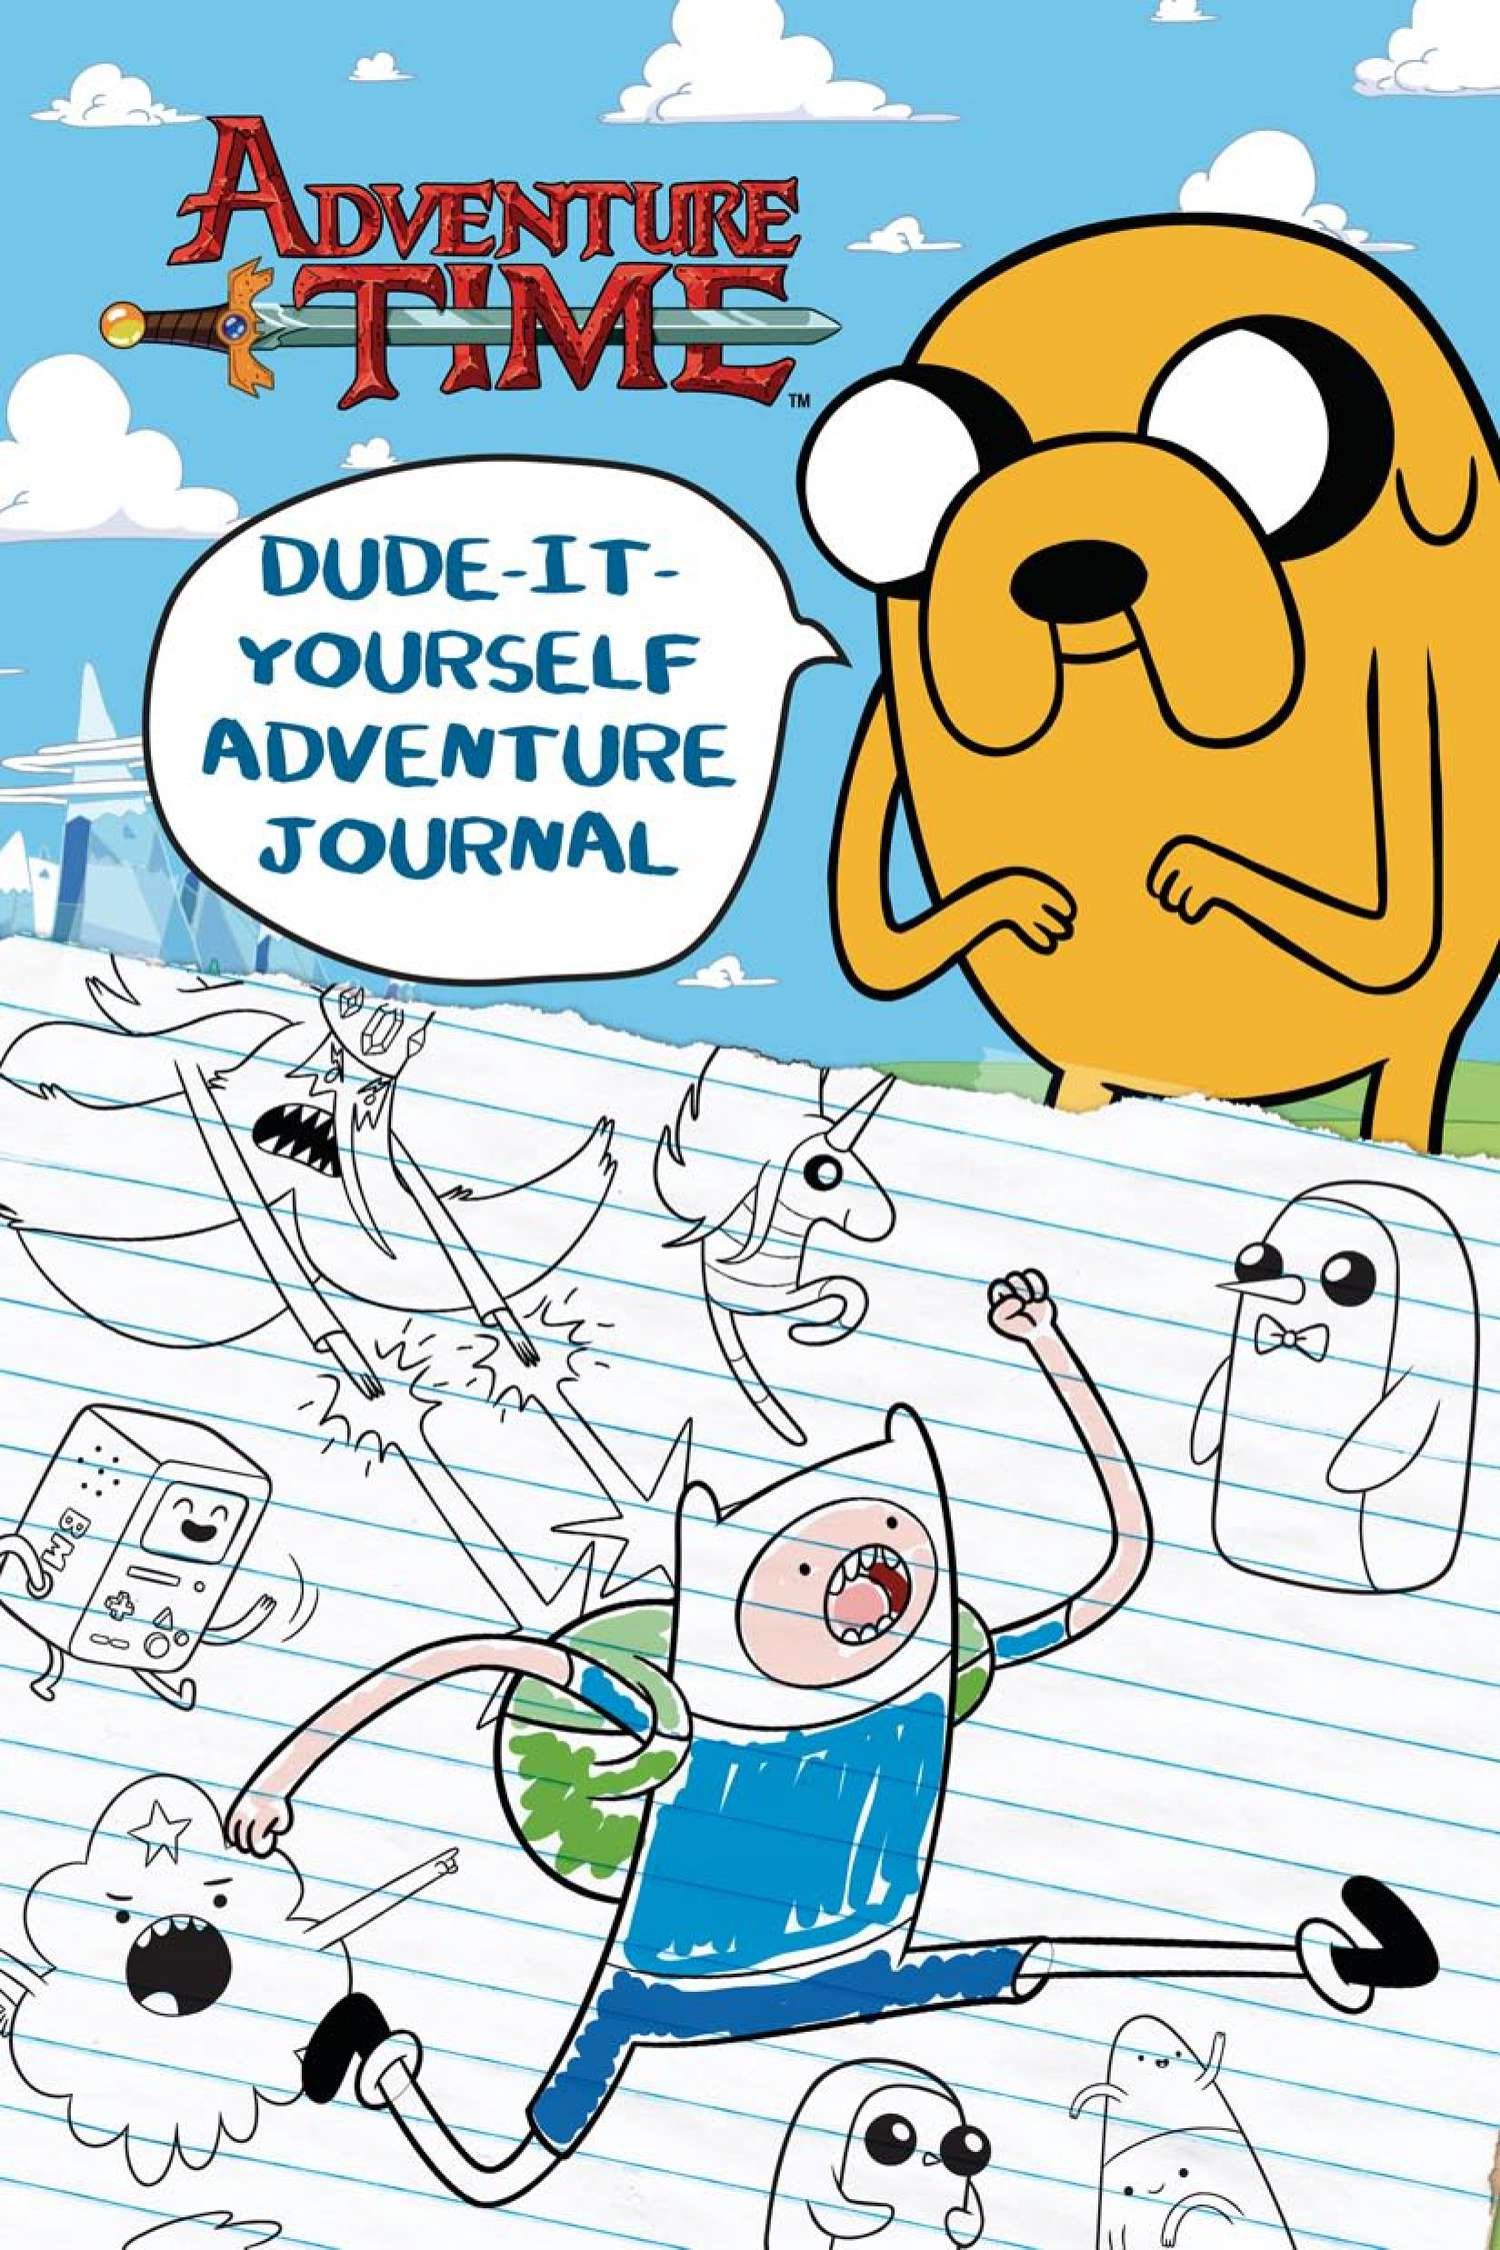 Dude-It-Yourself Adventure Journal (Hardcover) by Kirsten Mayer - image 1 of 2